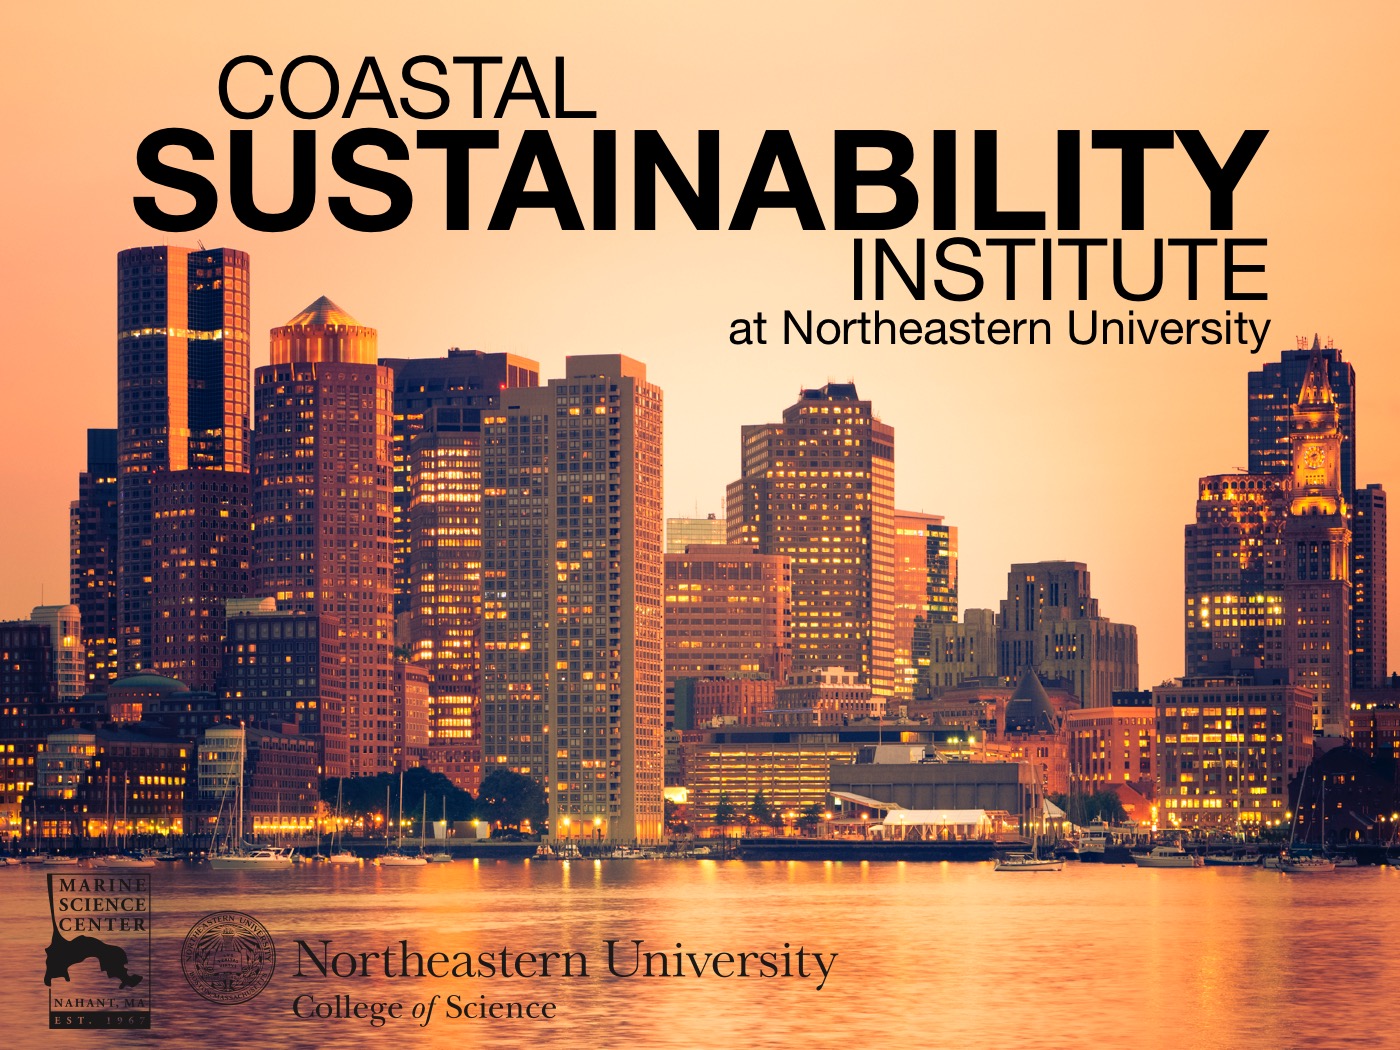 Coastal Sustainability Institute at Northeastern University